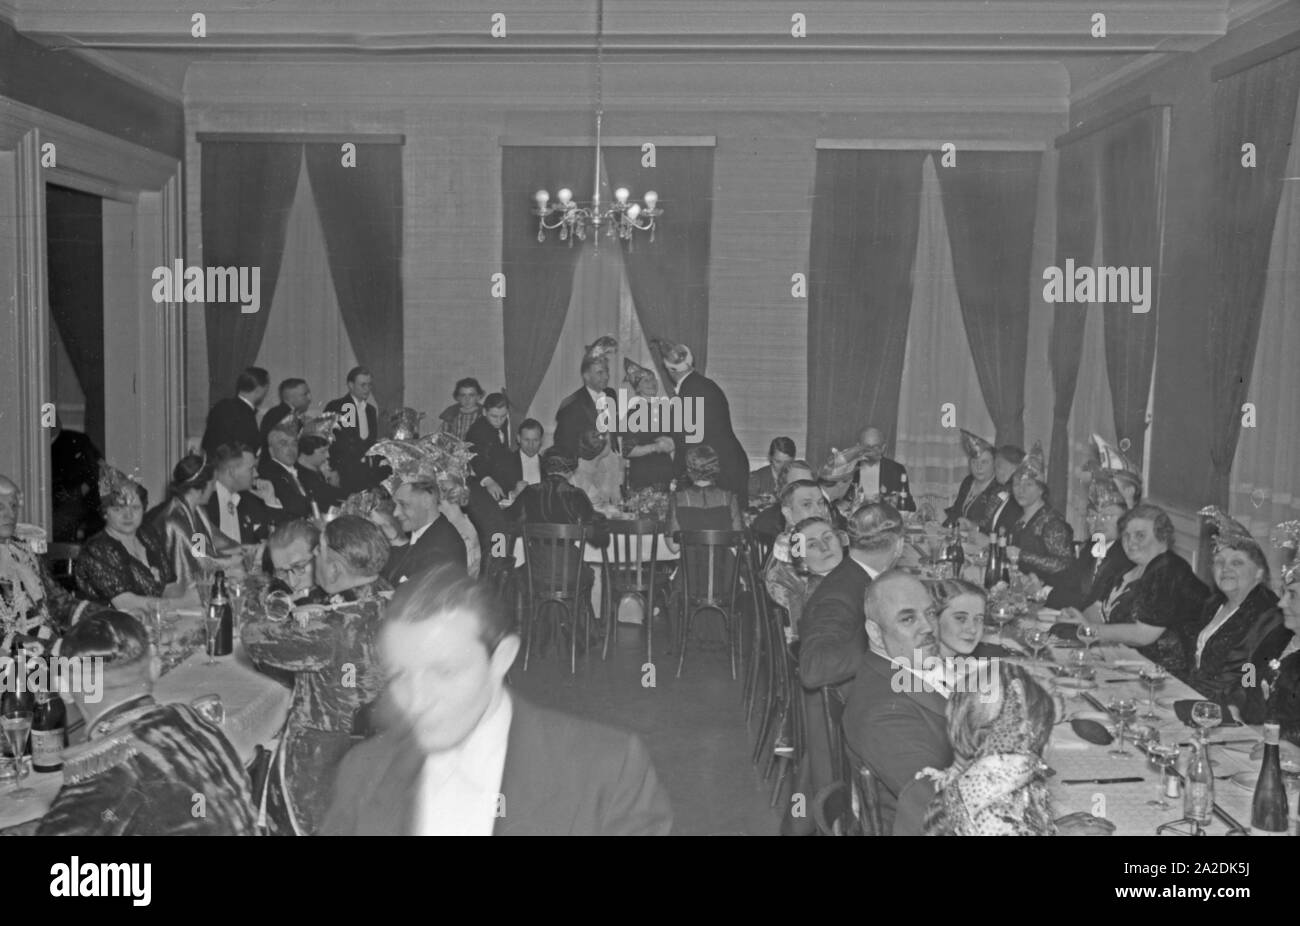 Offizielle und Granden der Mainzer Fastnacht feiern die Kampagne 1938. Officials and presidents celebrating the carnival season 1938 at the city of Mainz. Stock Photo